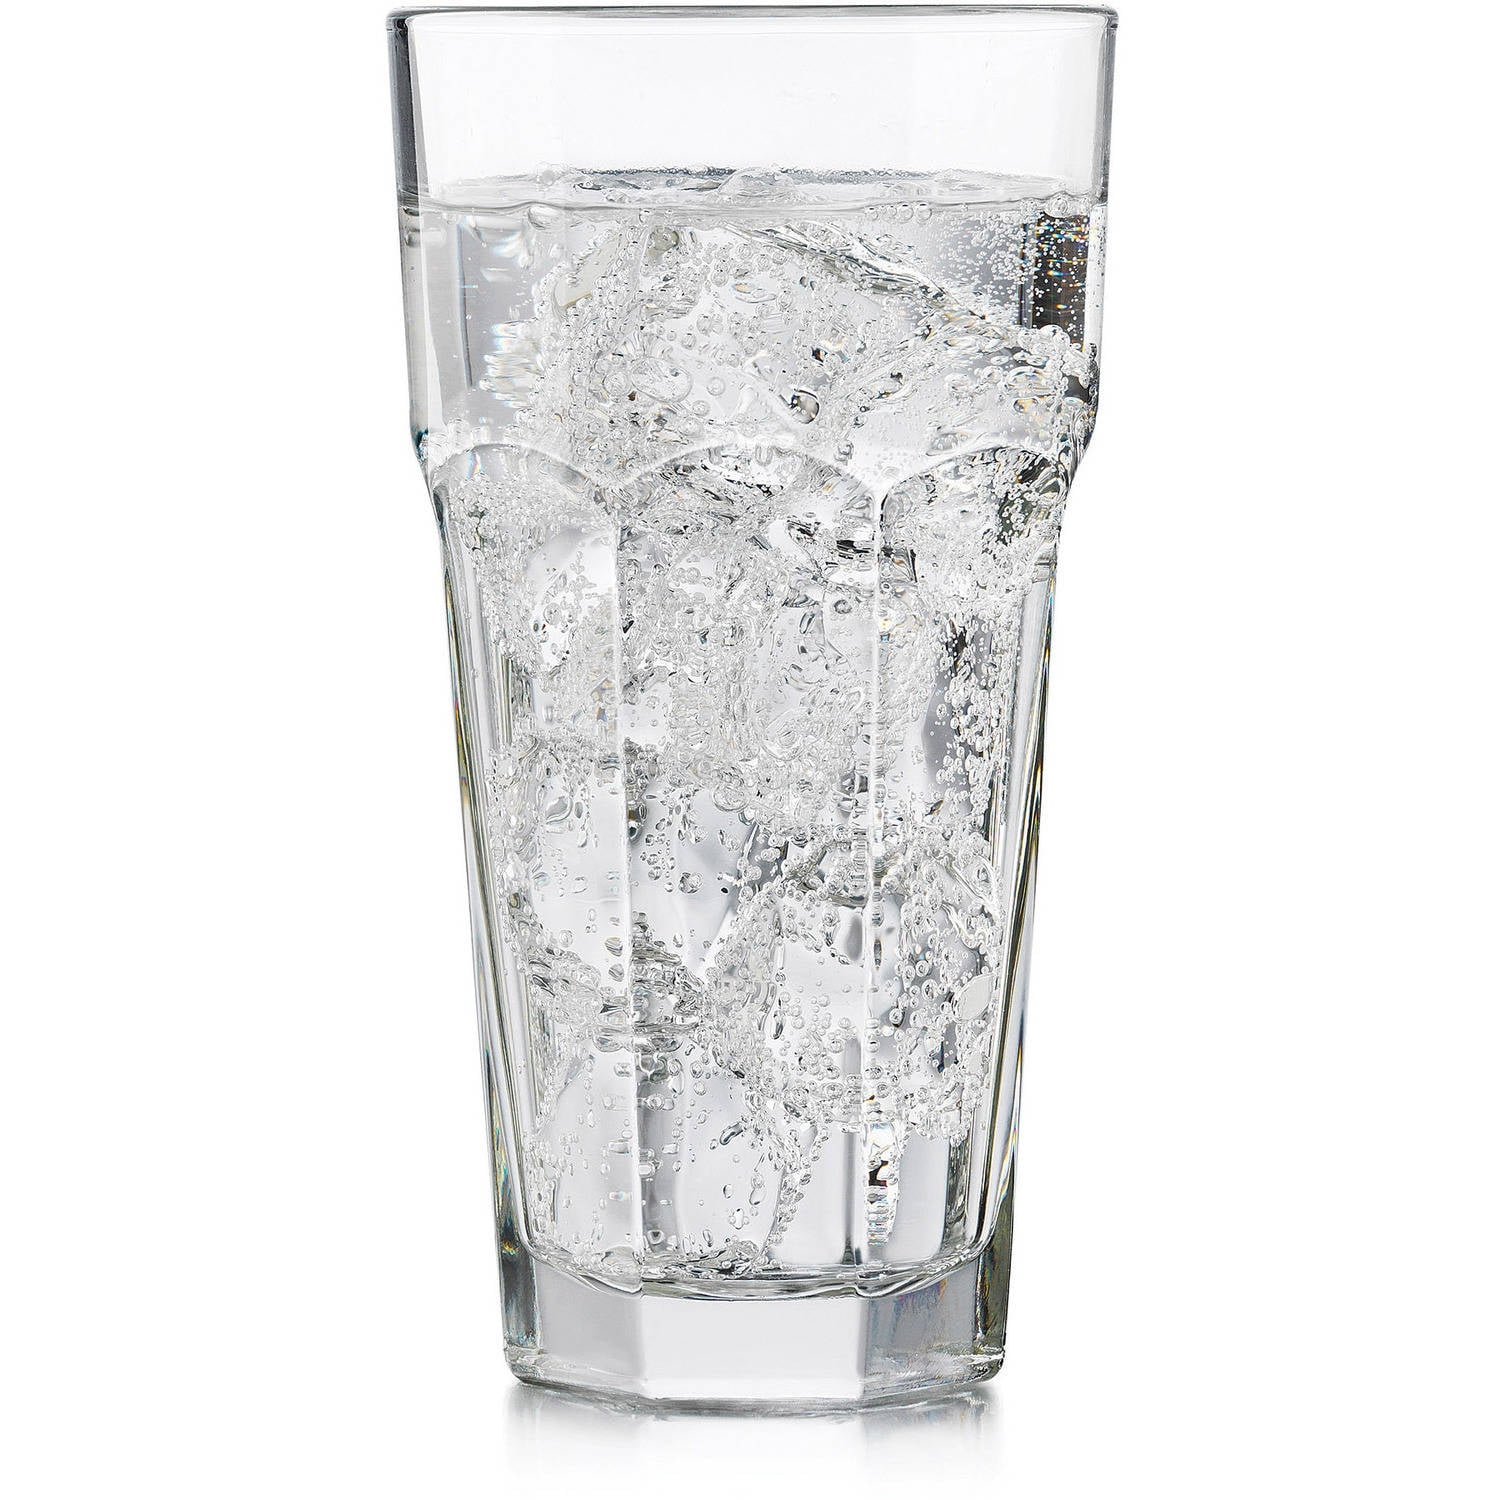 Libbey 15665 Gibraltar 20 oz. Cooler Glass - 24/Case